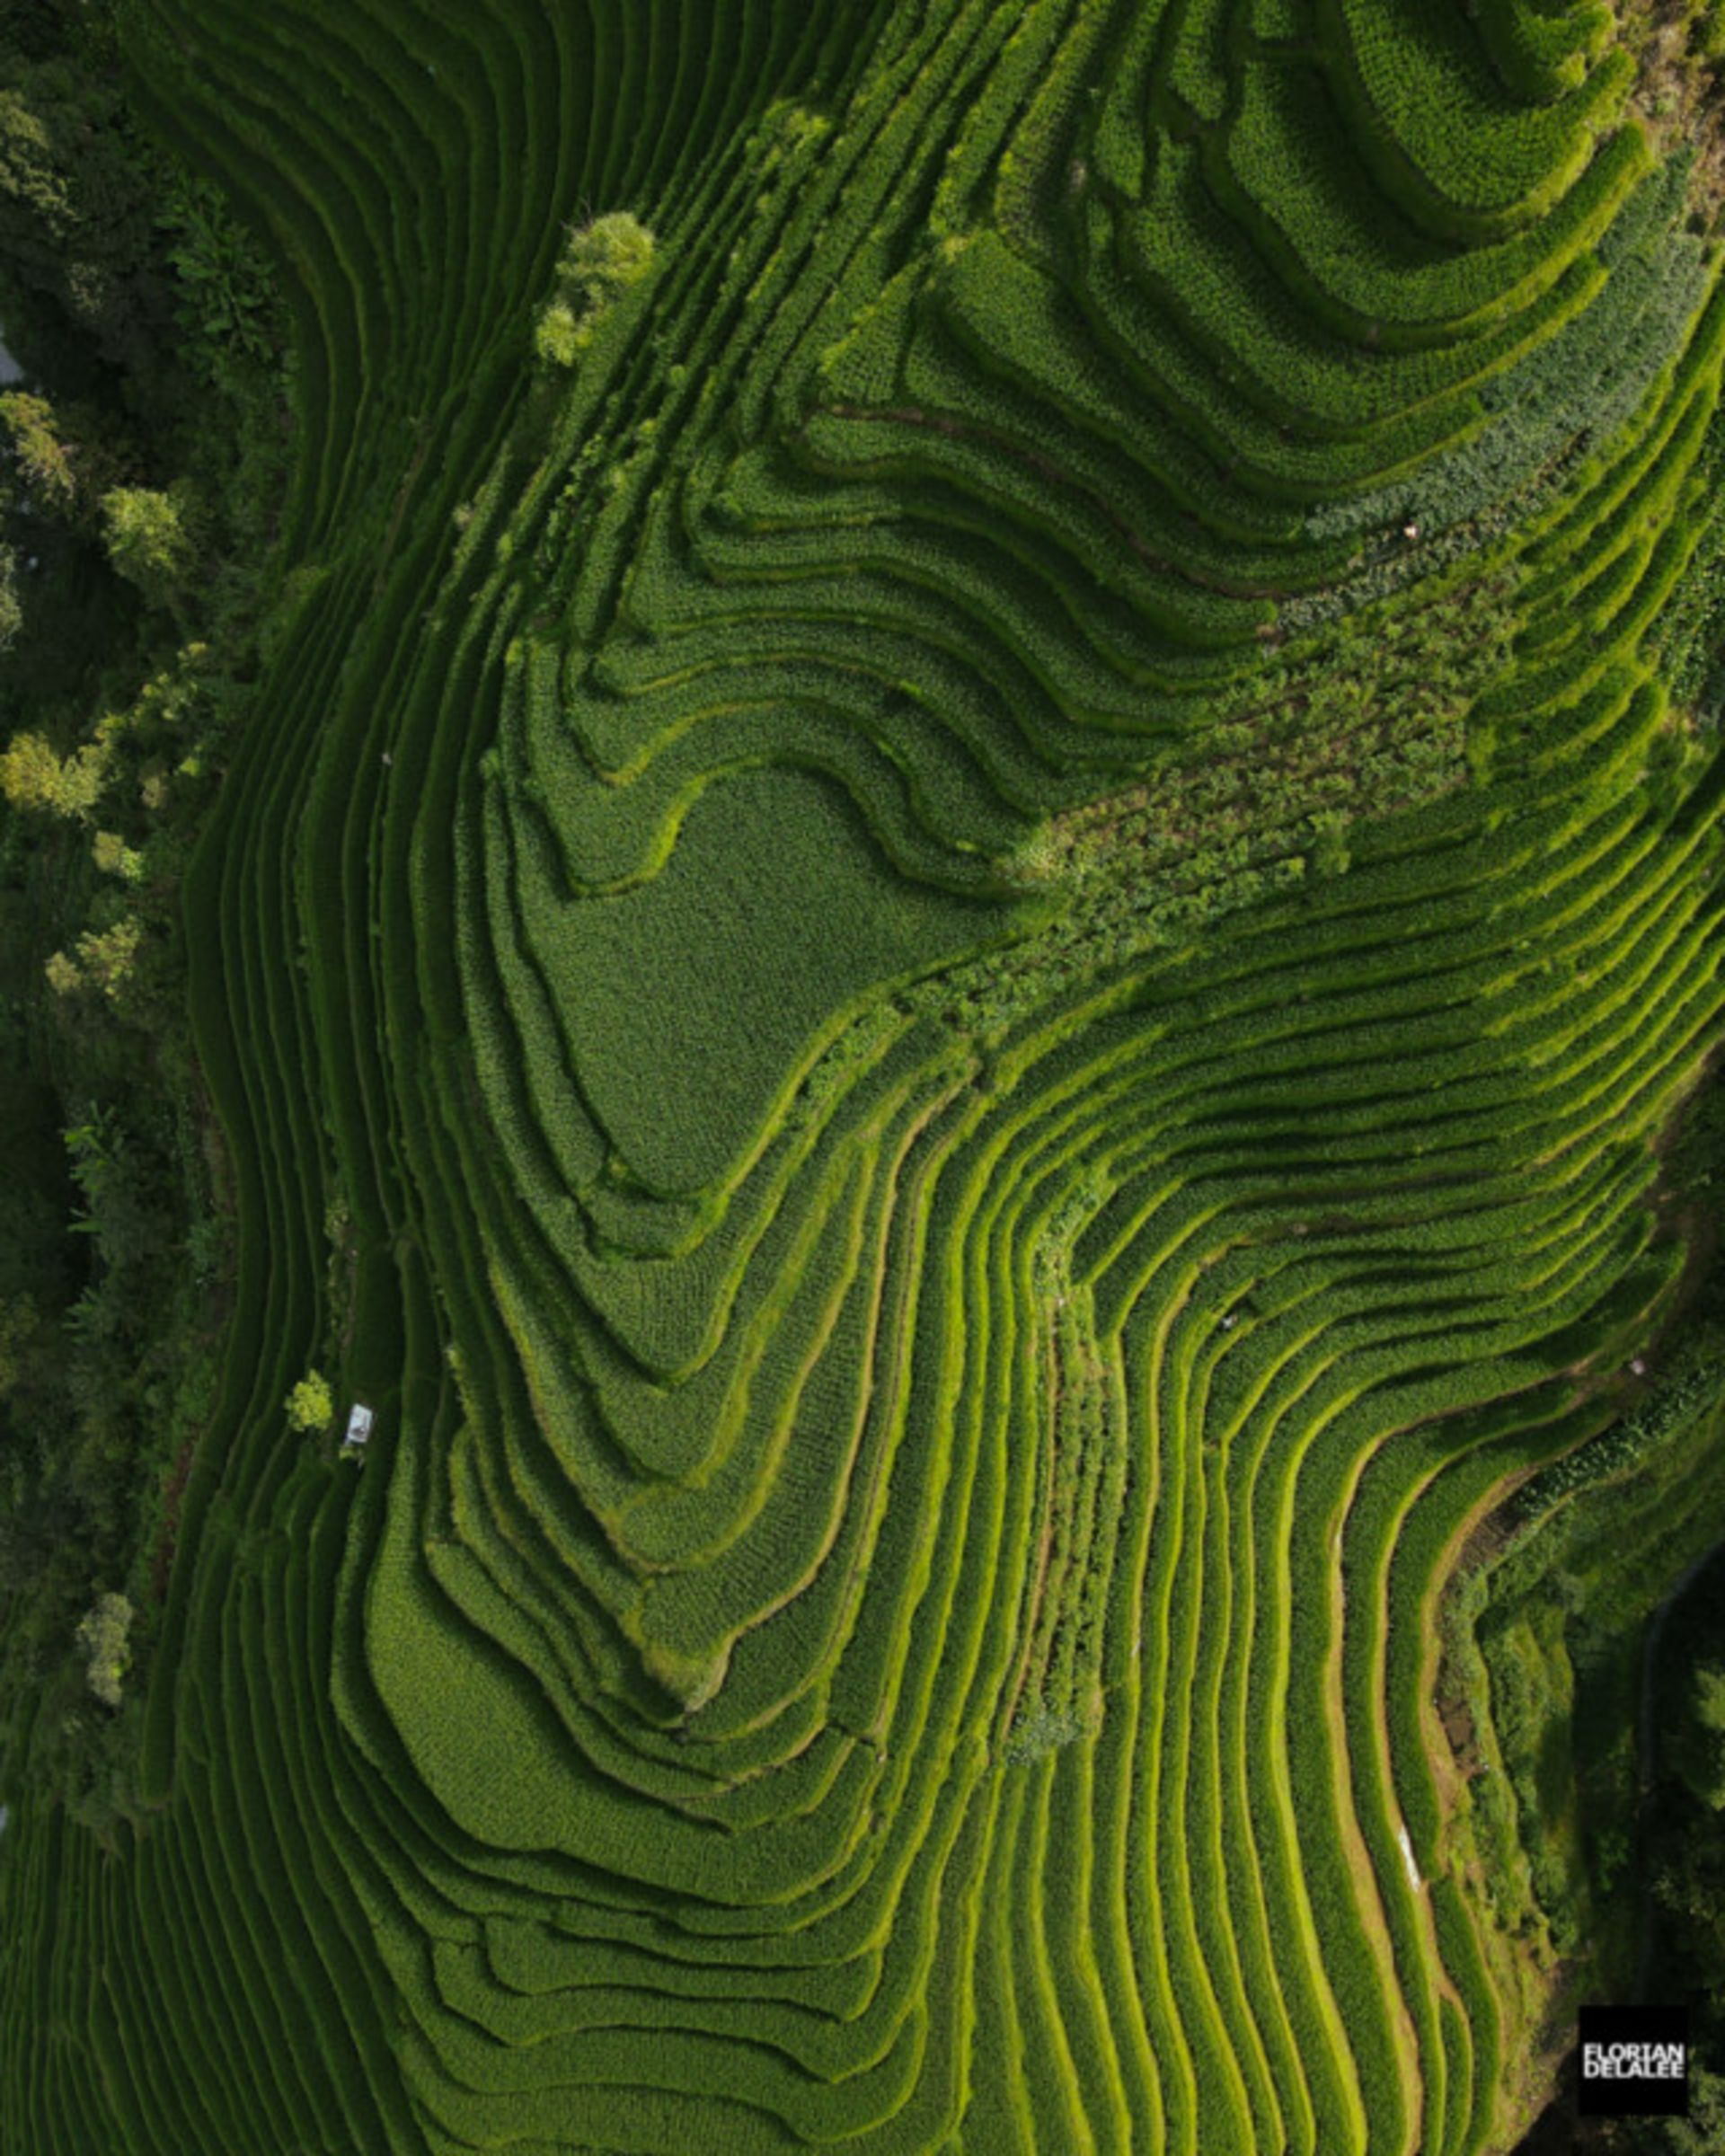 تصاویر هوایی از مناظر چین / فلوریان دلالی